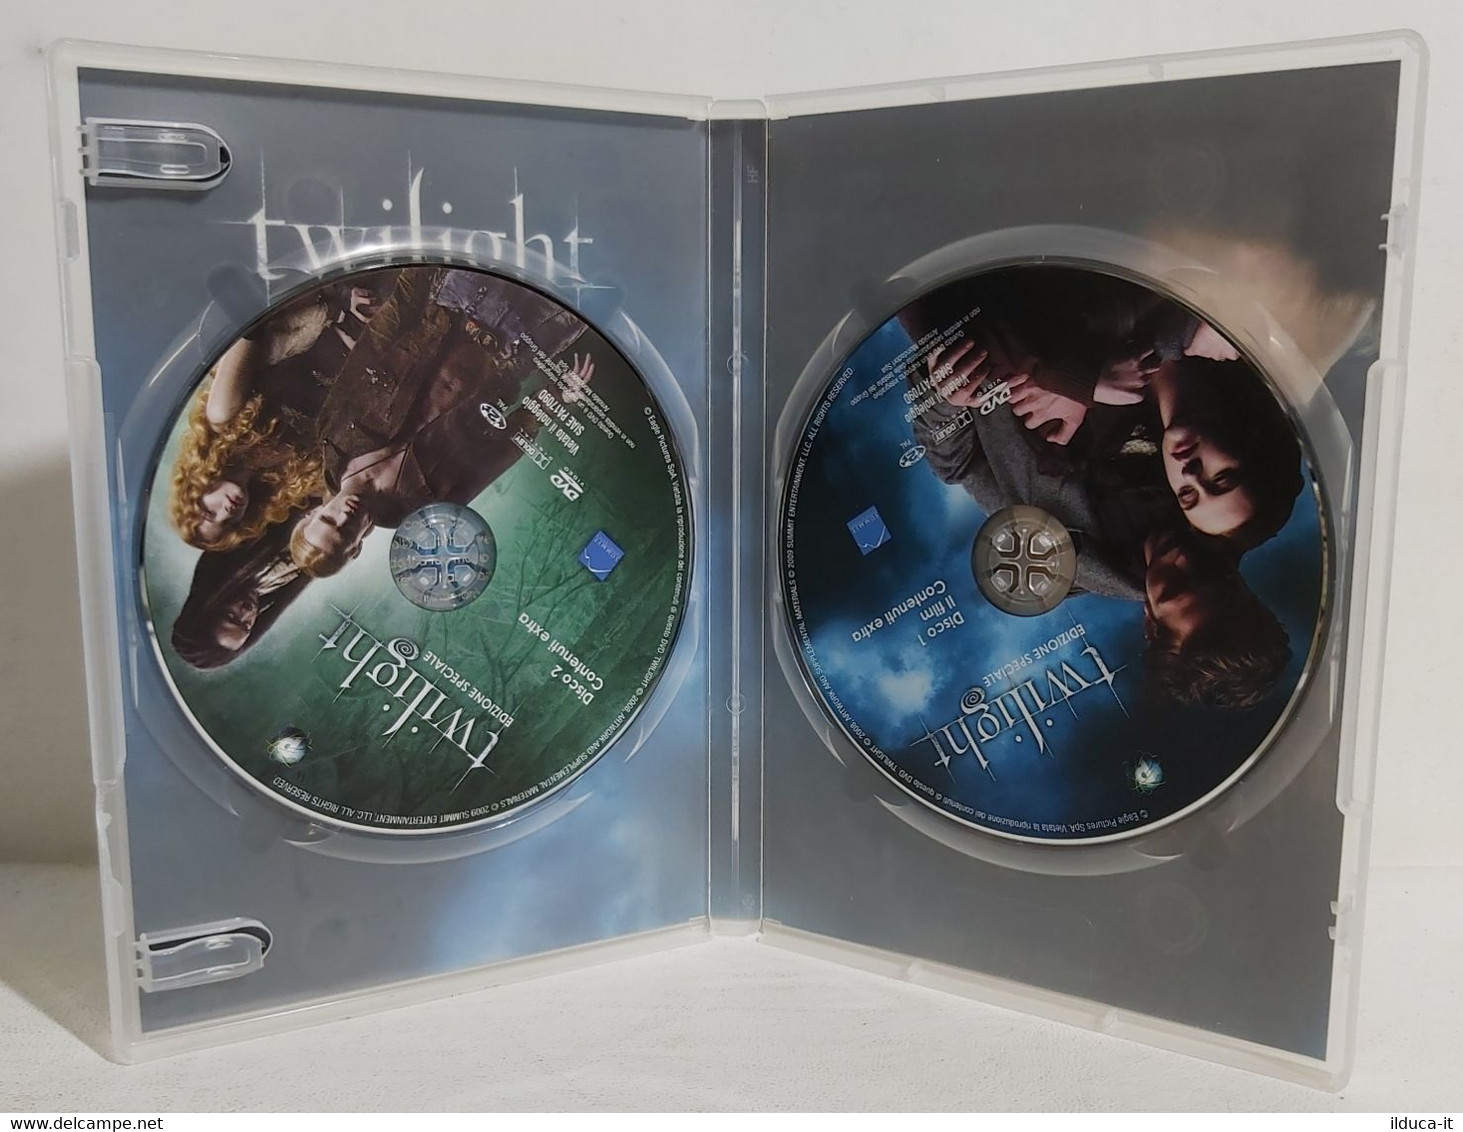 I103837 DVD Edizione Speciale 2 Dischi - TWILIGHT (2008) - Kristen Stewart - Science-Fiction & Fantasy